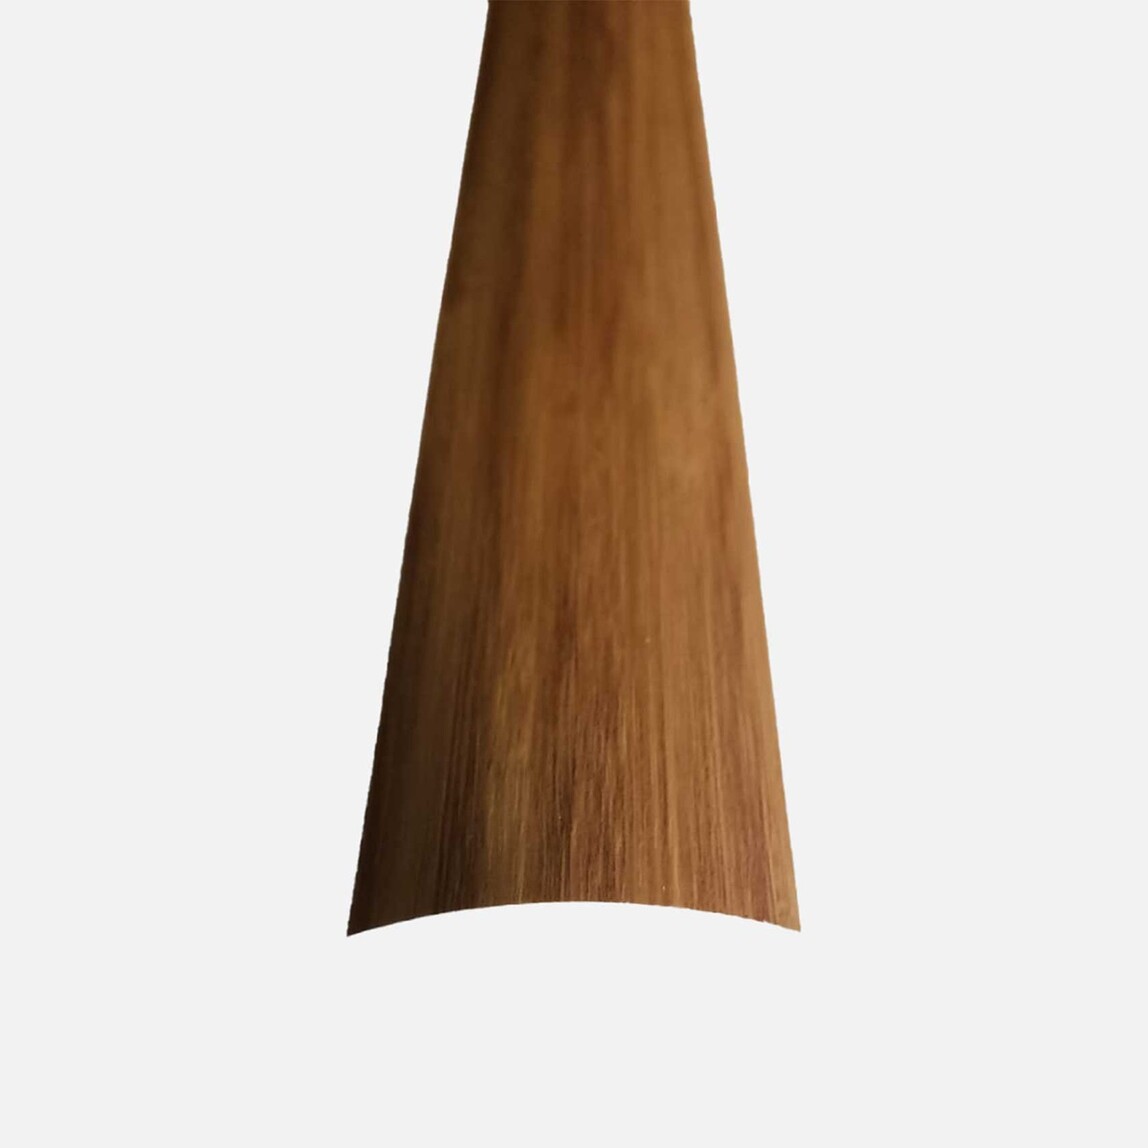    Ersin 3104 41mm Gizli Vidalı Seviye Profili Bambu 270 cm 